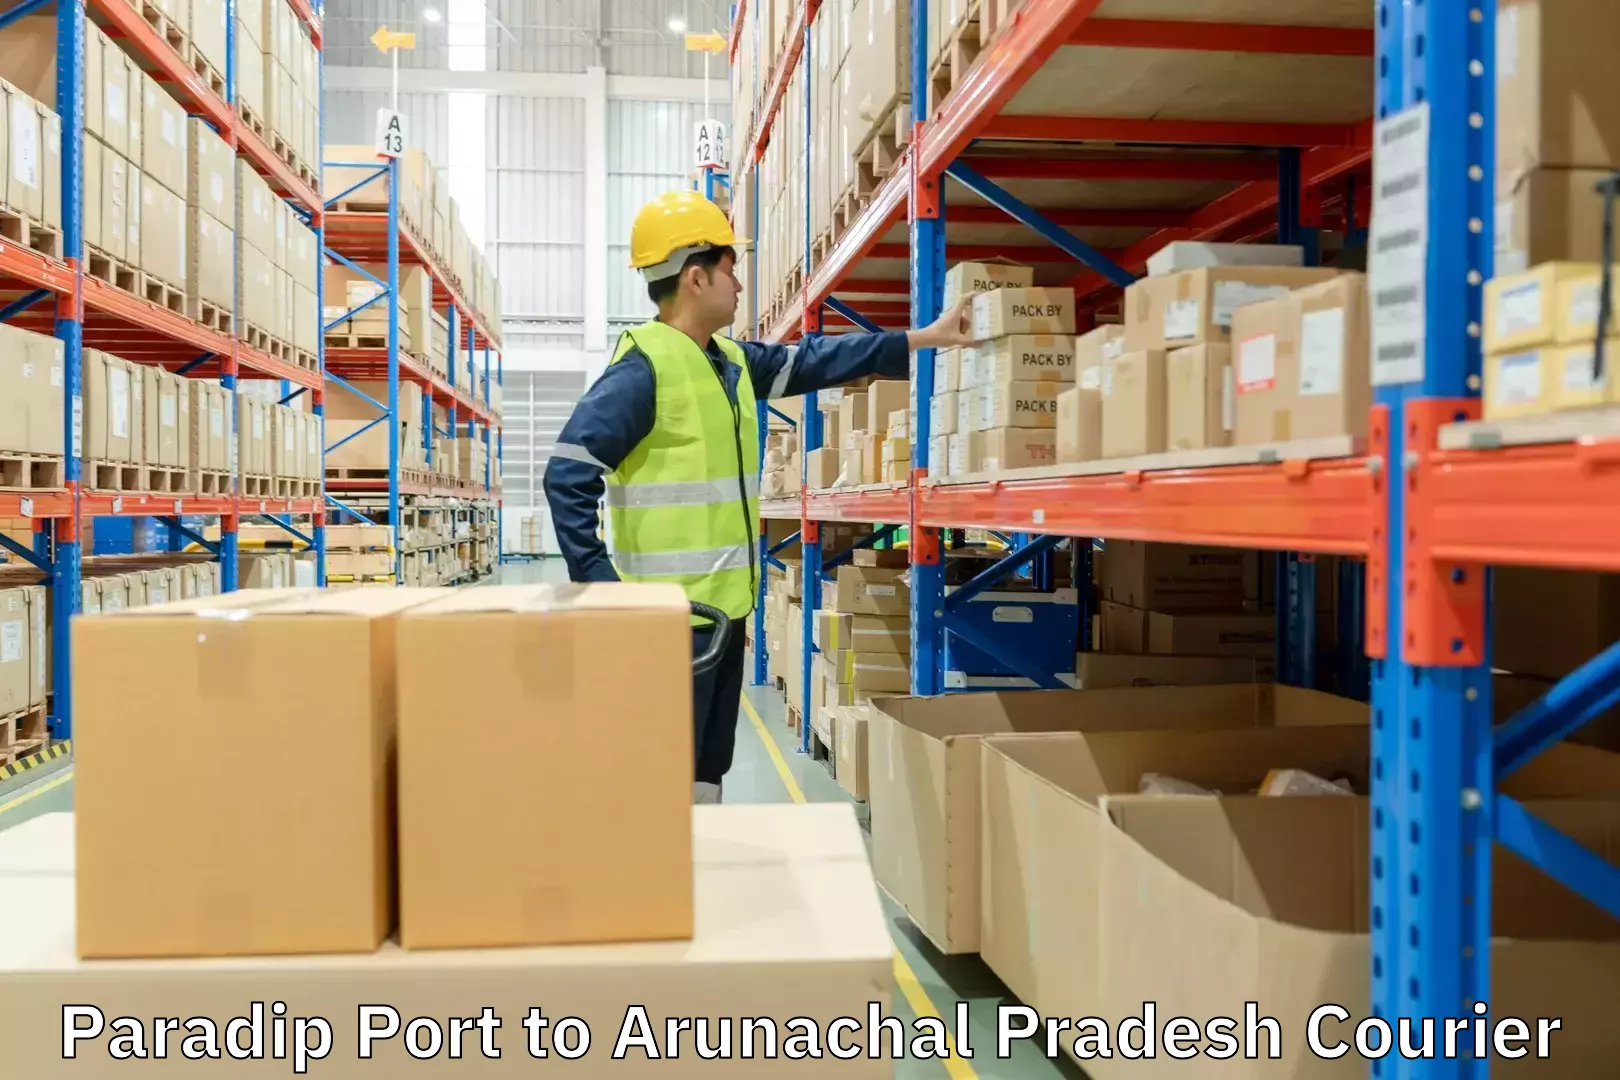 International courier networks Paradip Port to Arunachal Pradesh